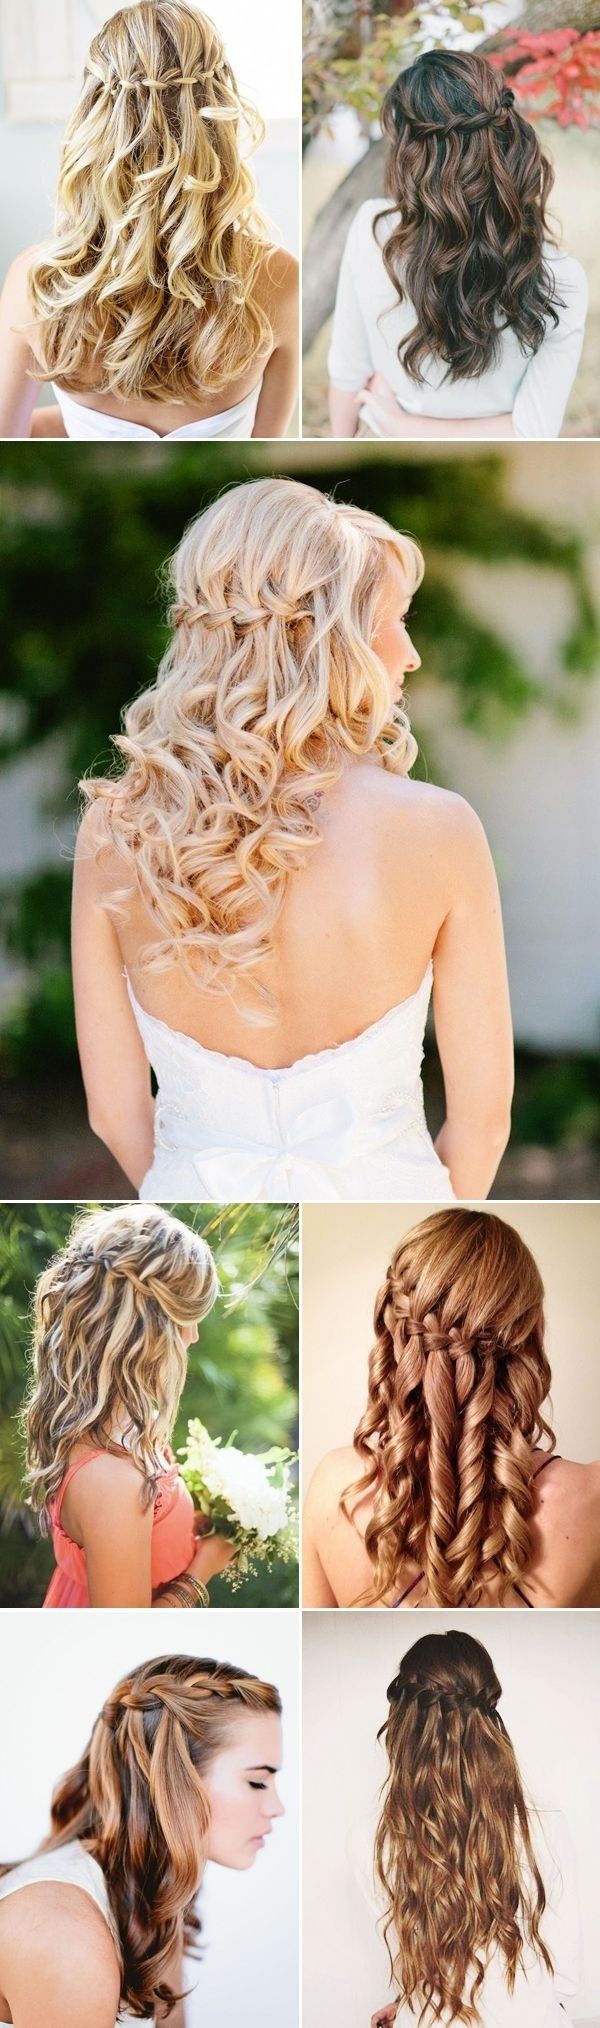 30-Hottest-Bridesmaid-Hairstyles-For-Long-Hair.jpg